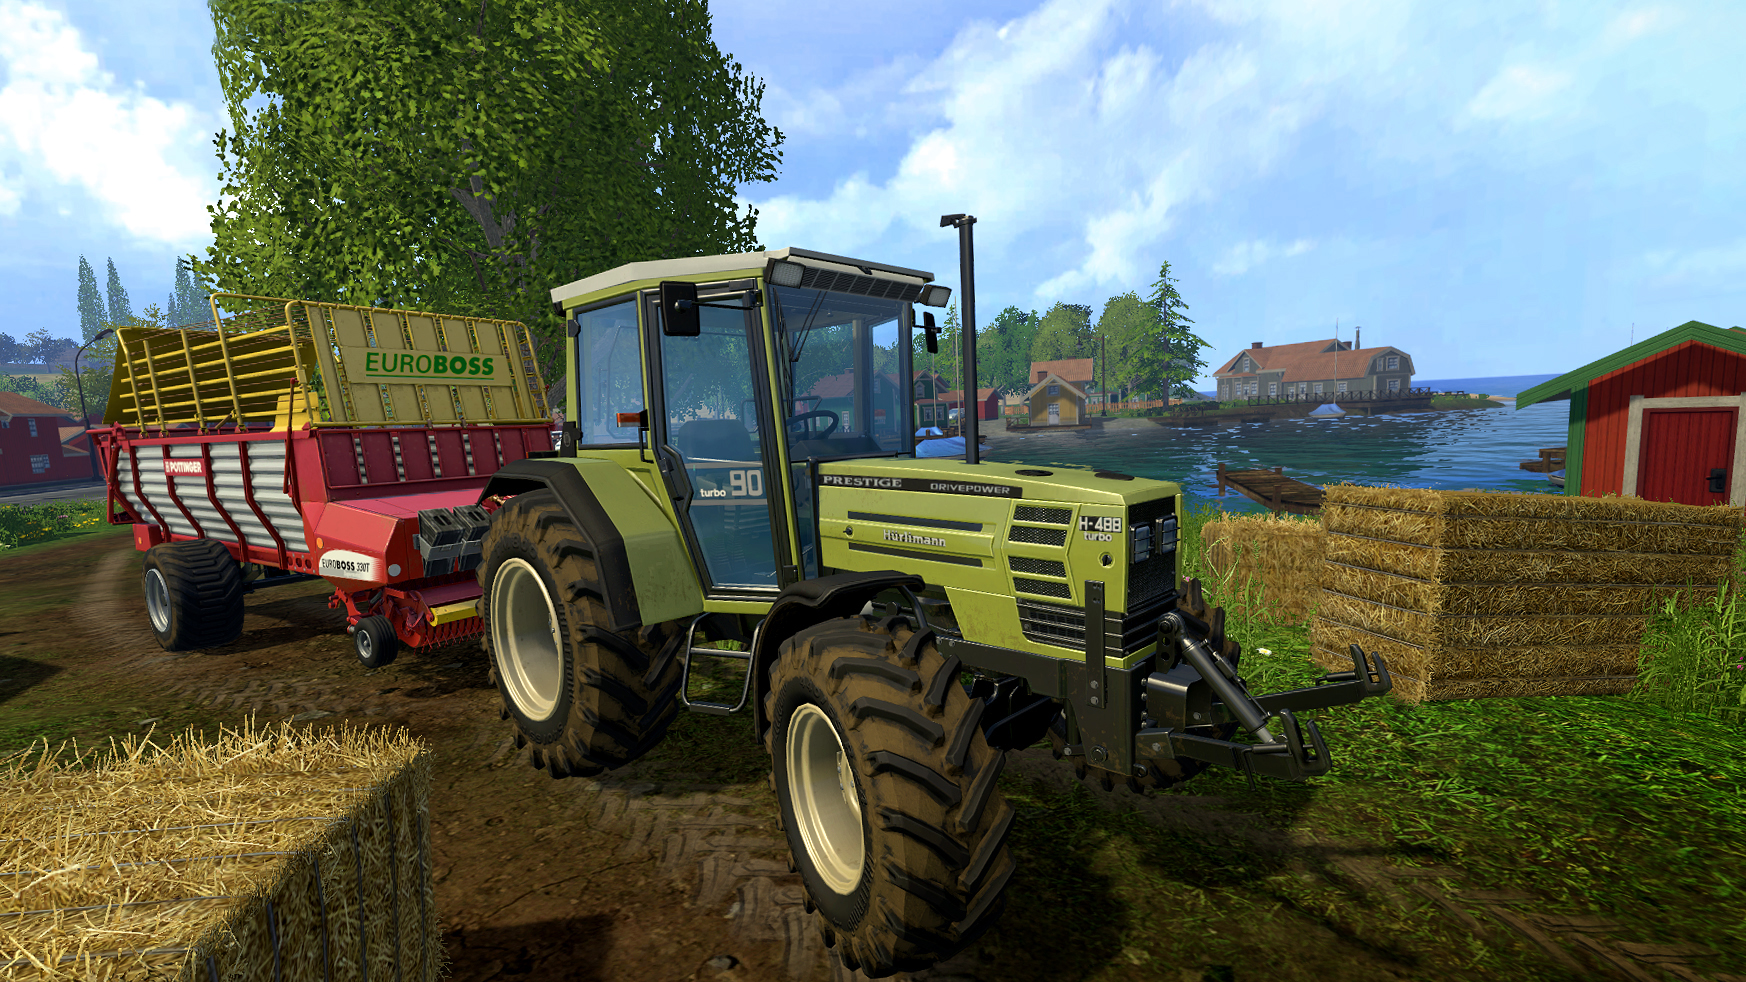 download free farming simulator 13 xbox 360